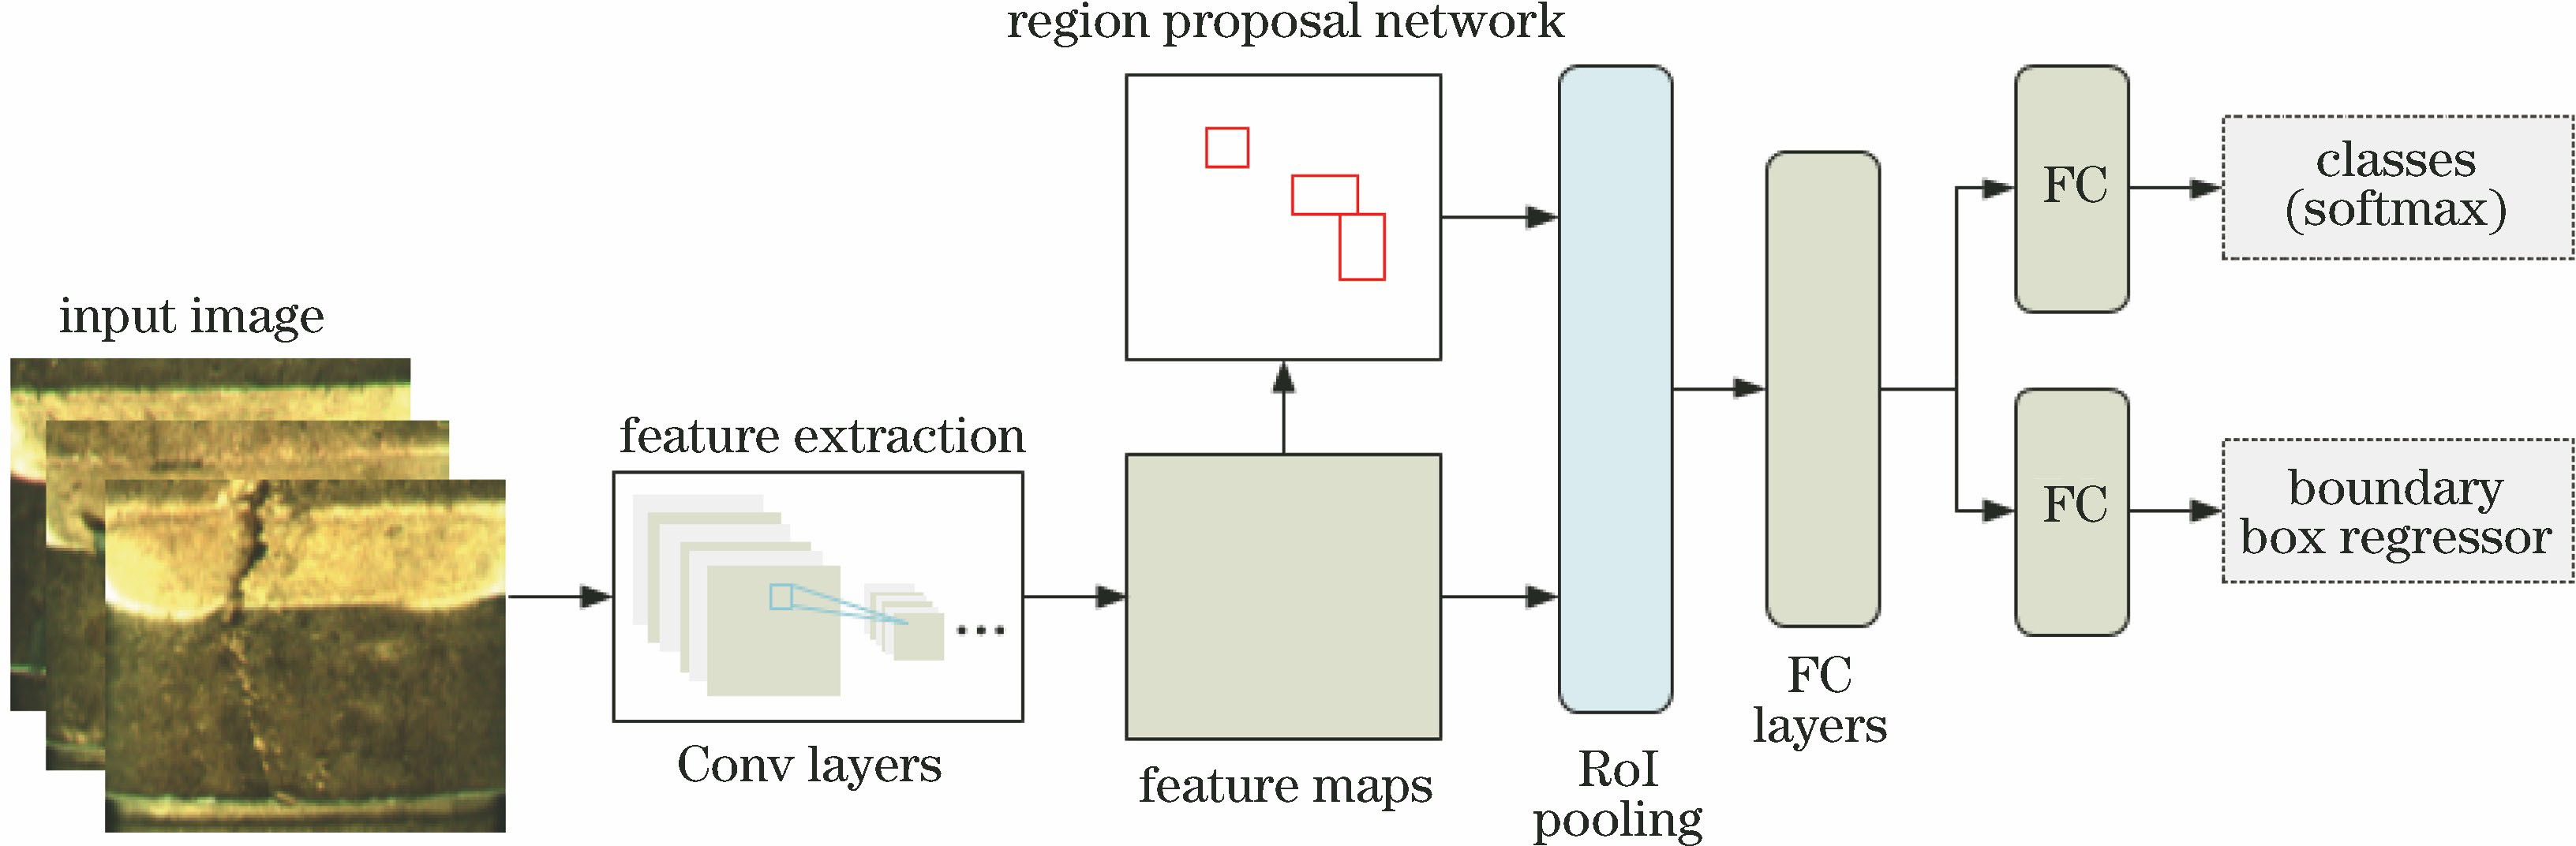 Target detection framework based on Faster R-CNN